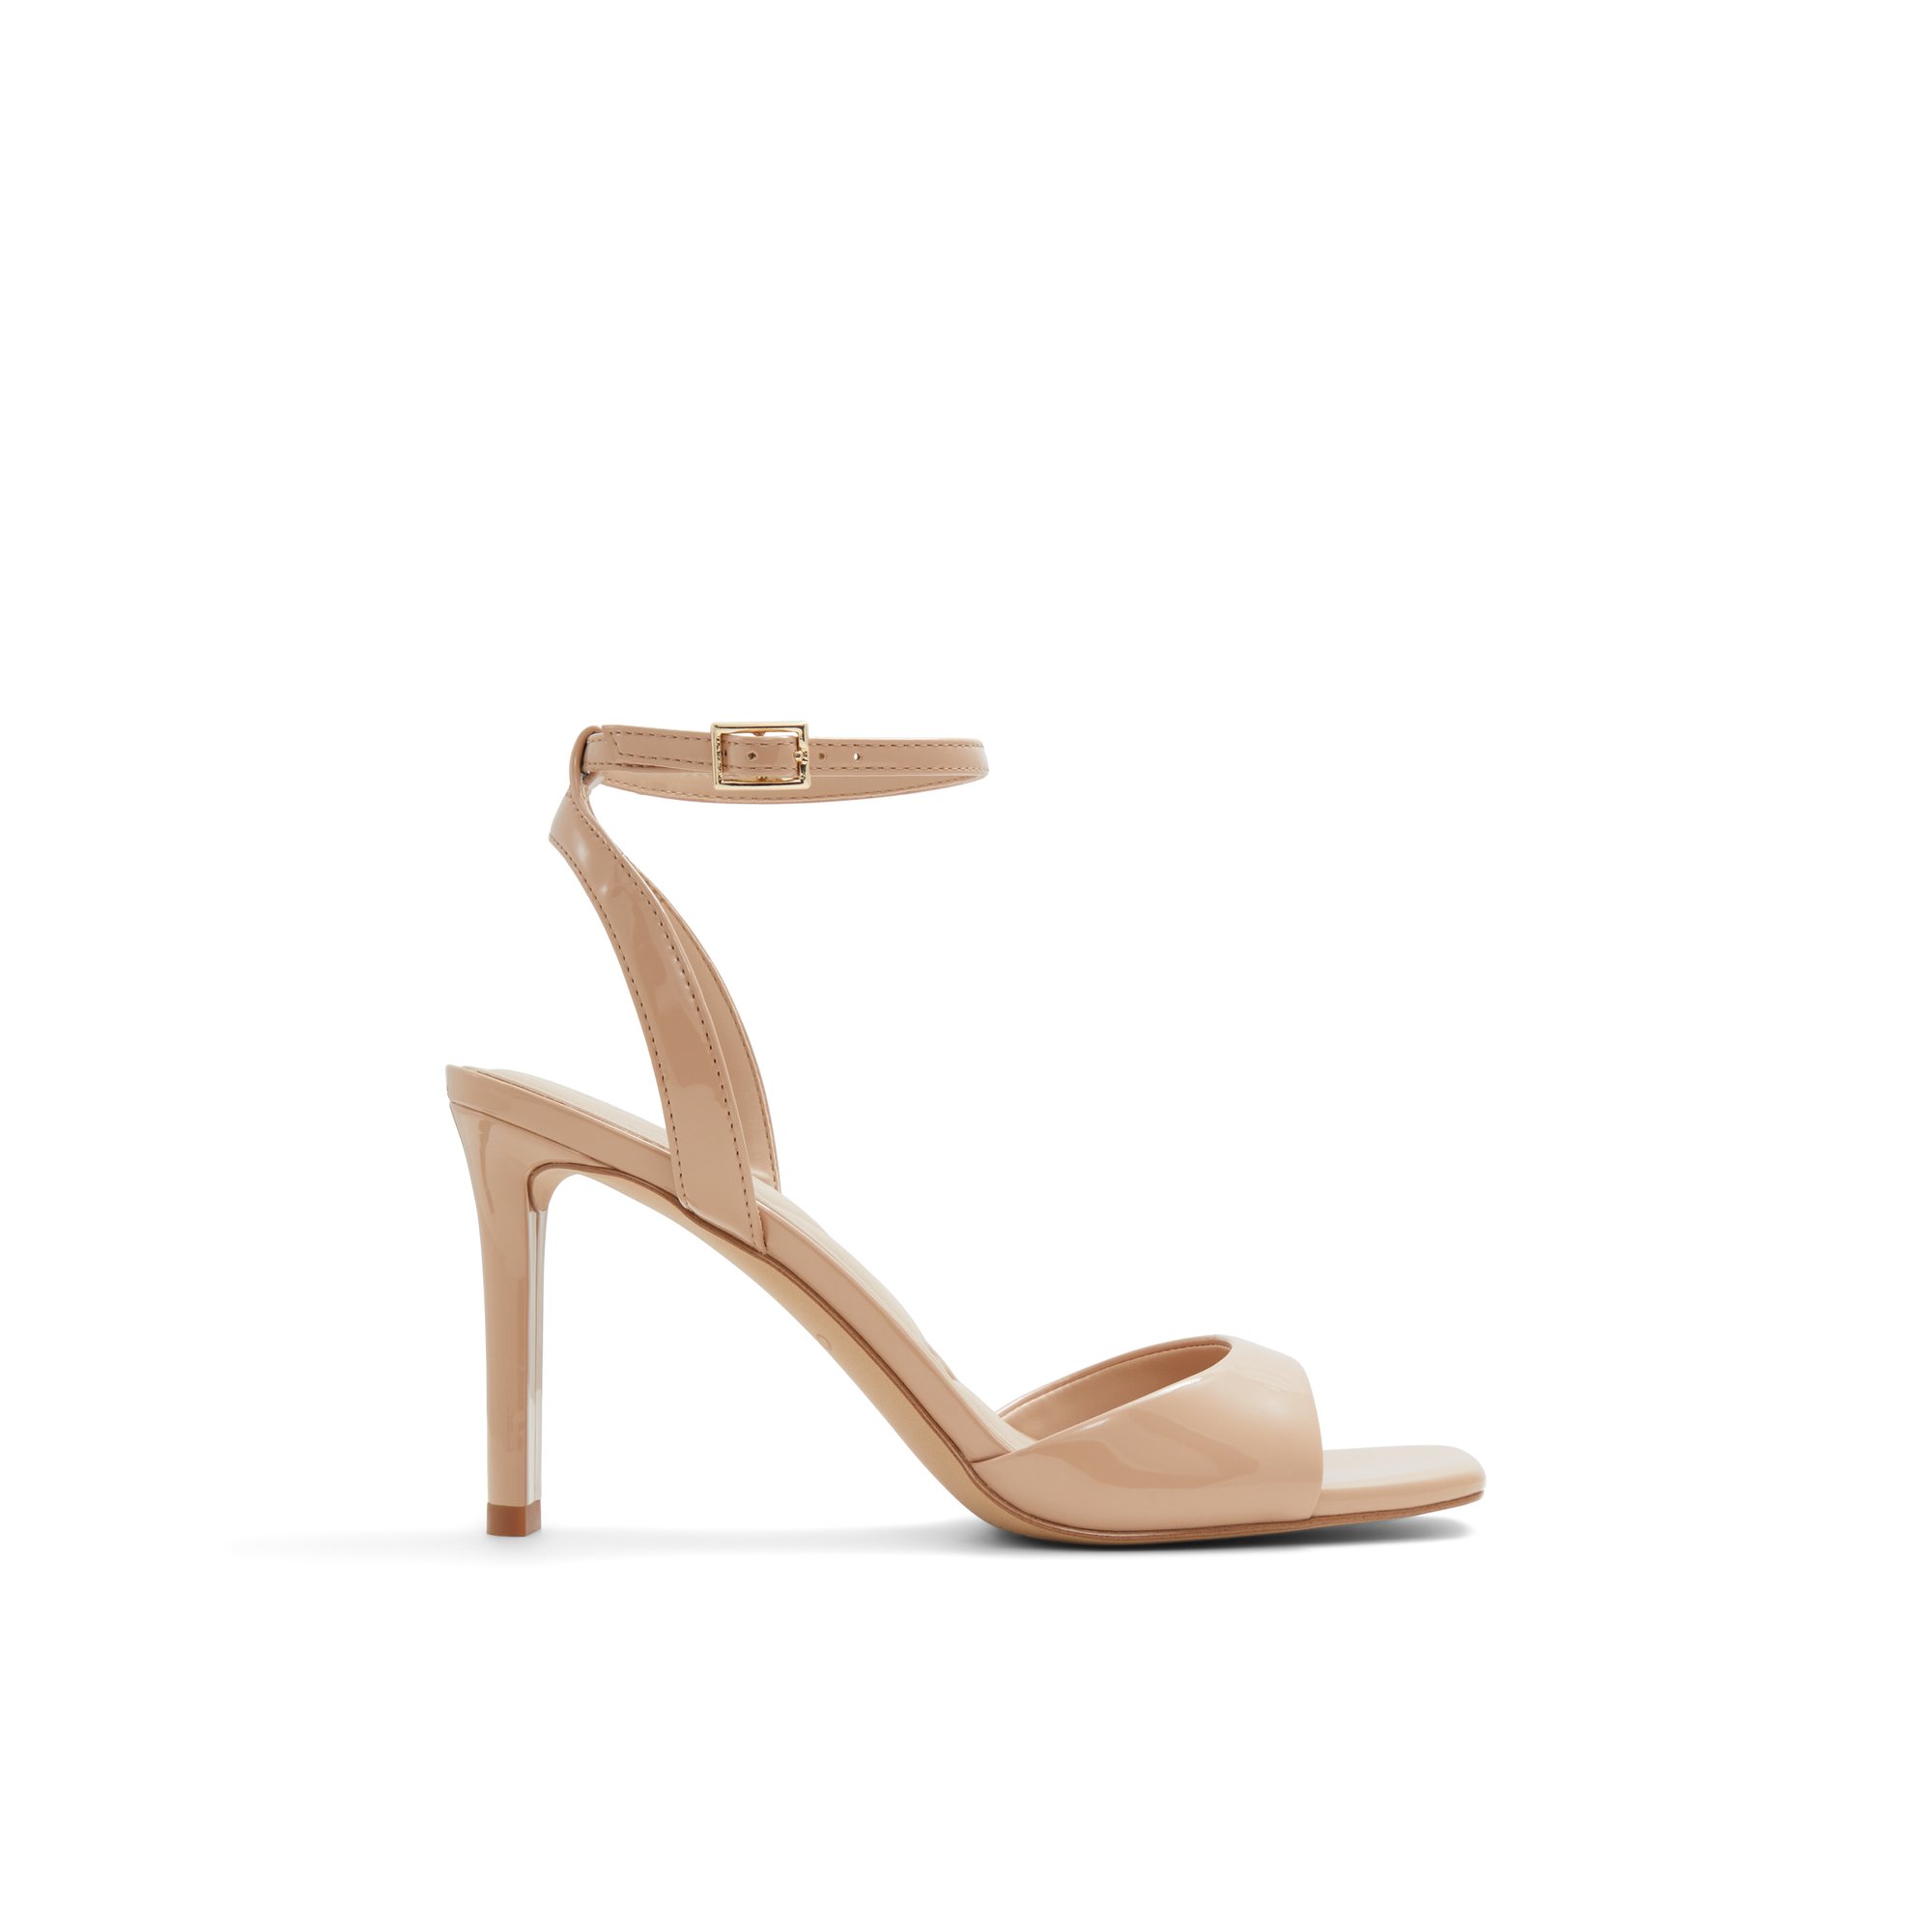 ALDO Sake - Women's Strappy Sandal Sandals - Brown